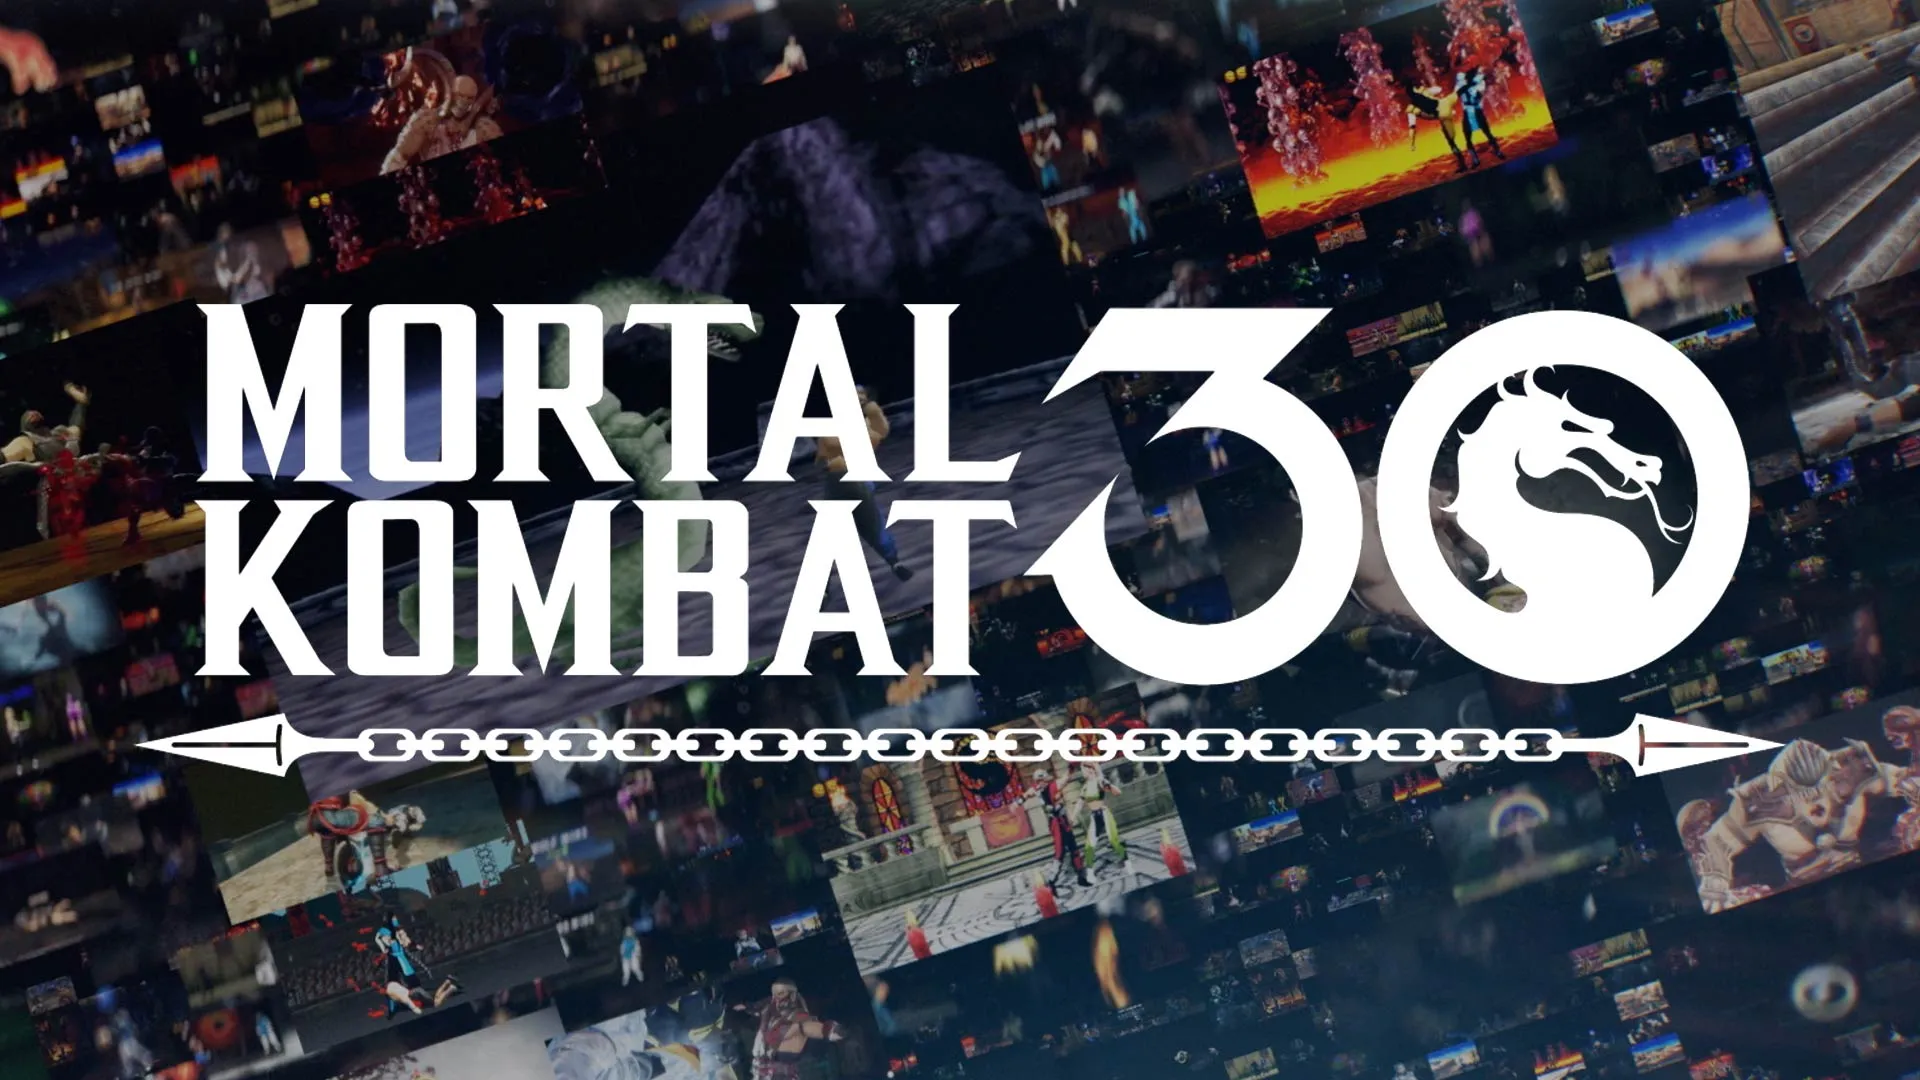 Mortal Kombat 30th Anniversary: New video celebrates the classic fighting game